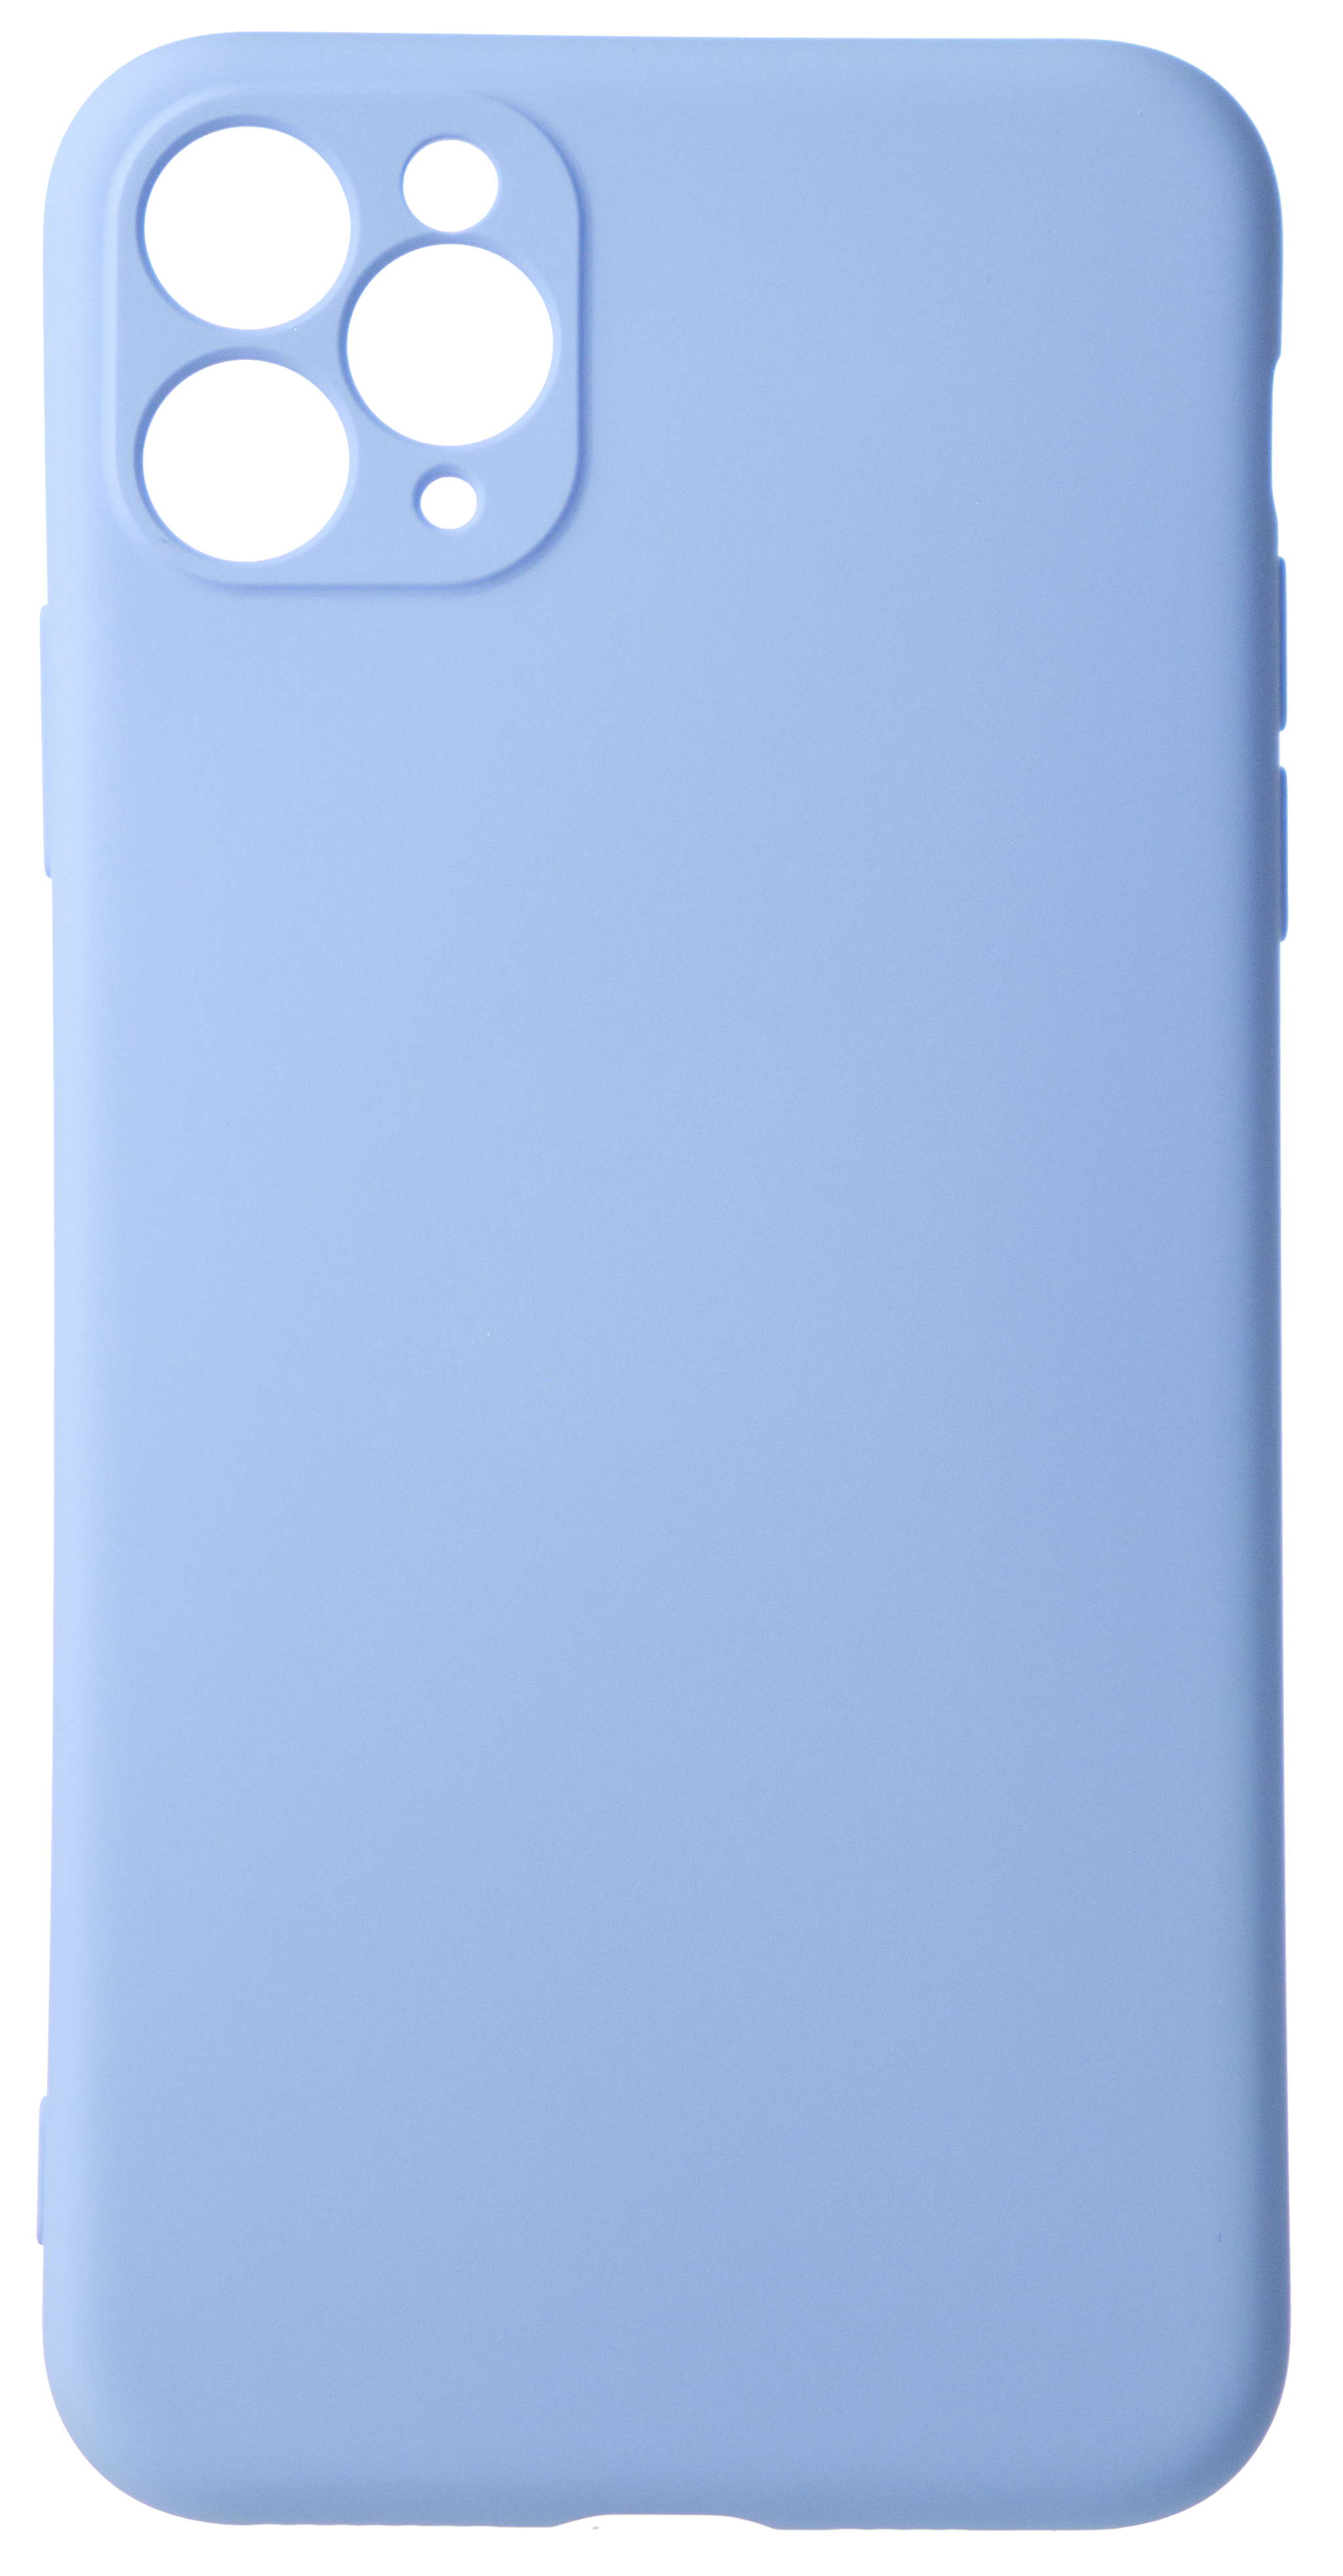 Чехол Soft-Touch для iPhone 11 Pro Max светло-голубой